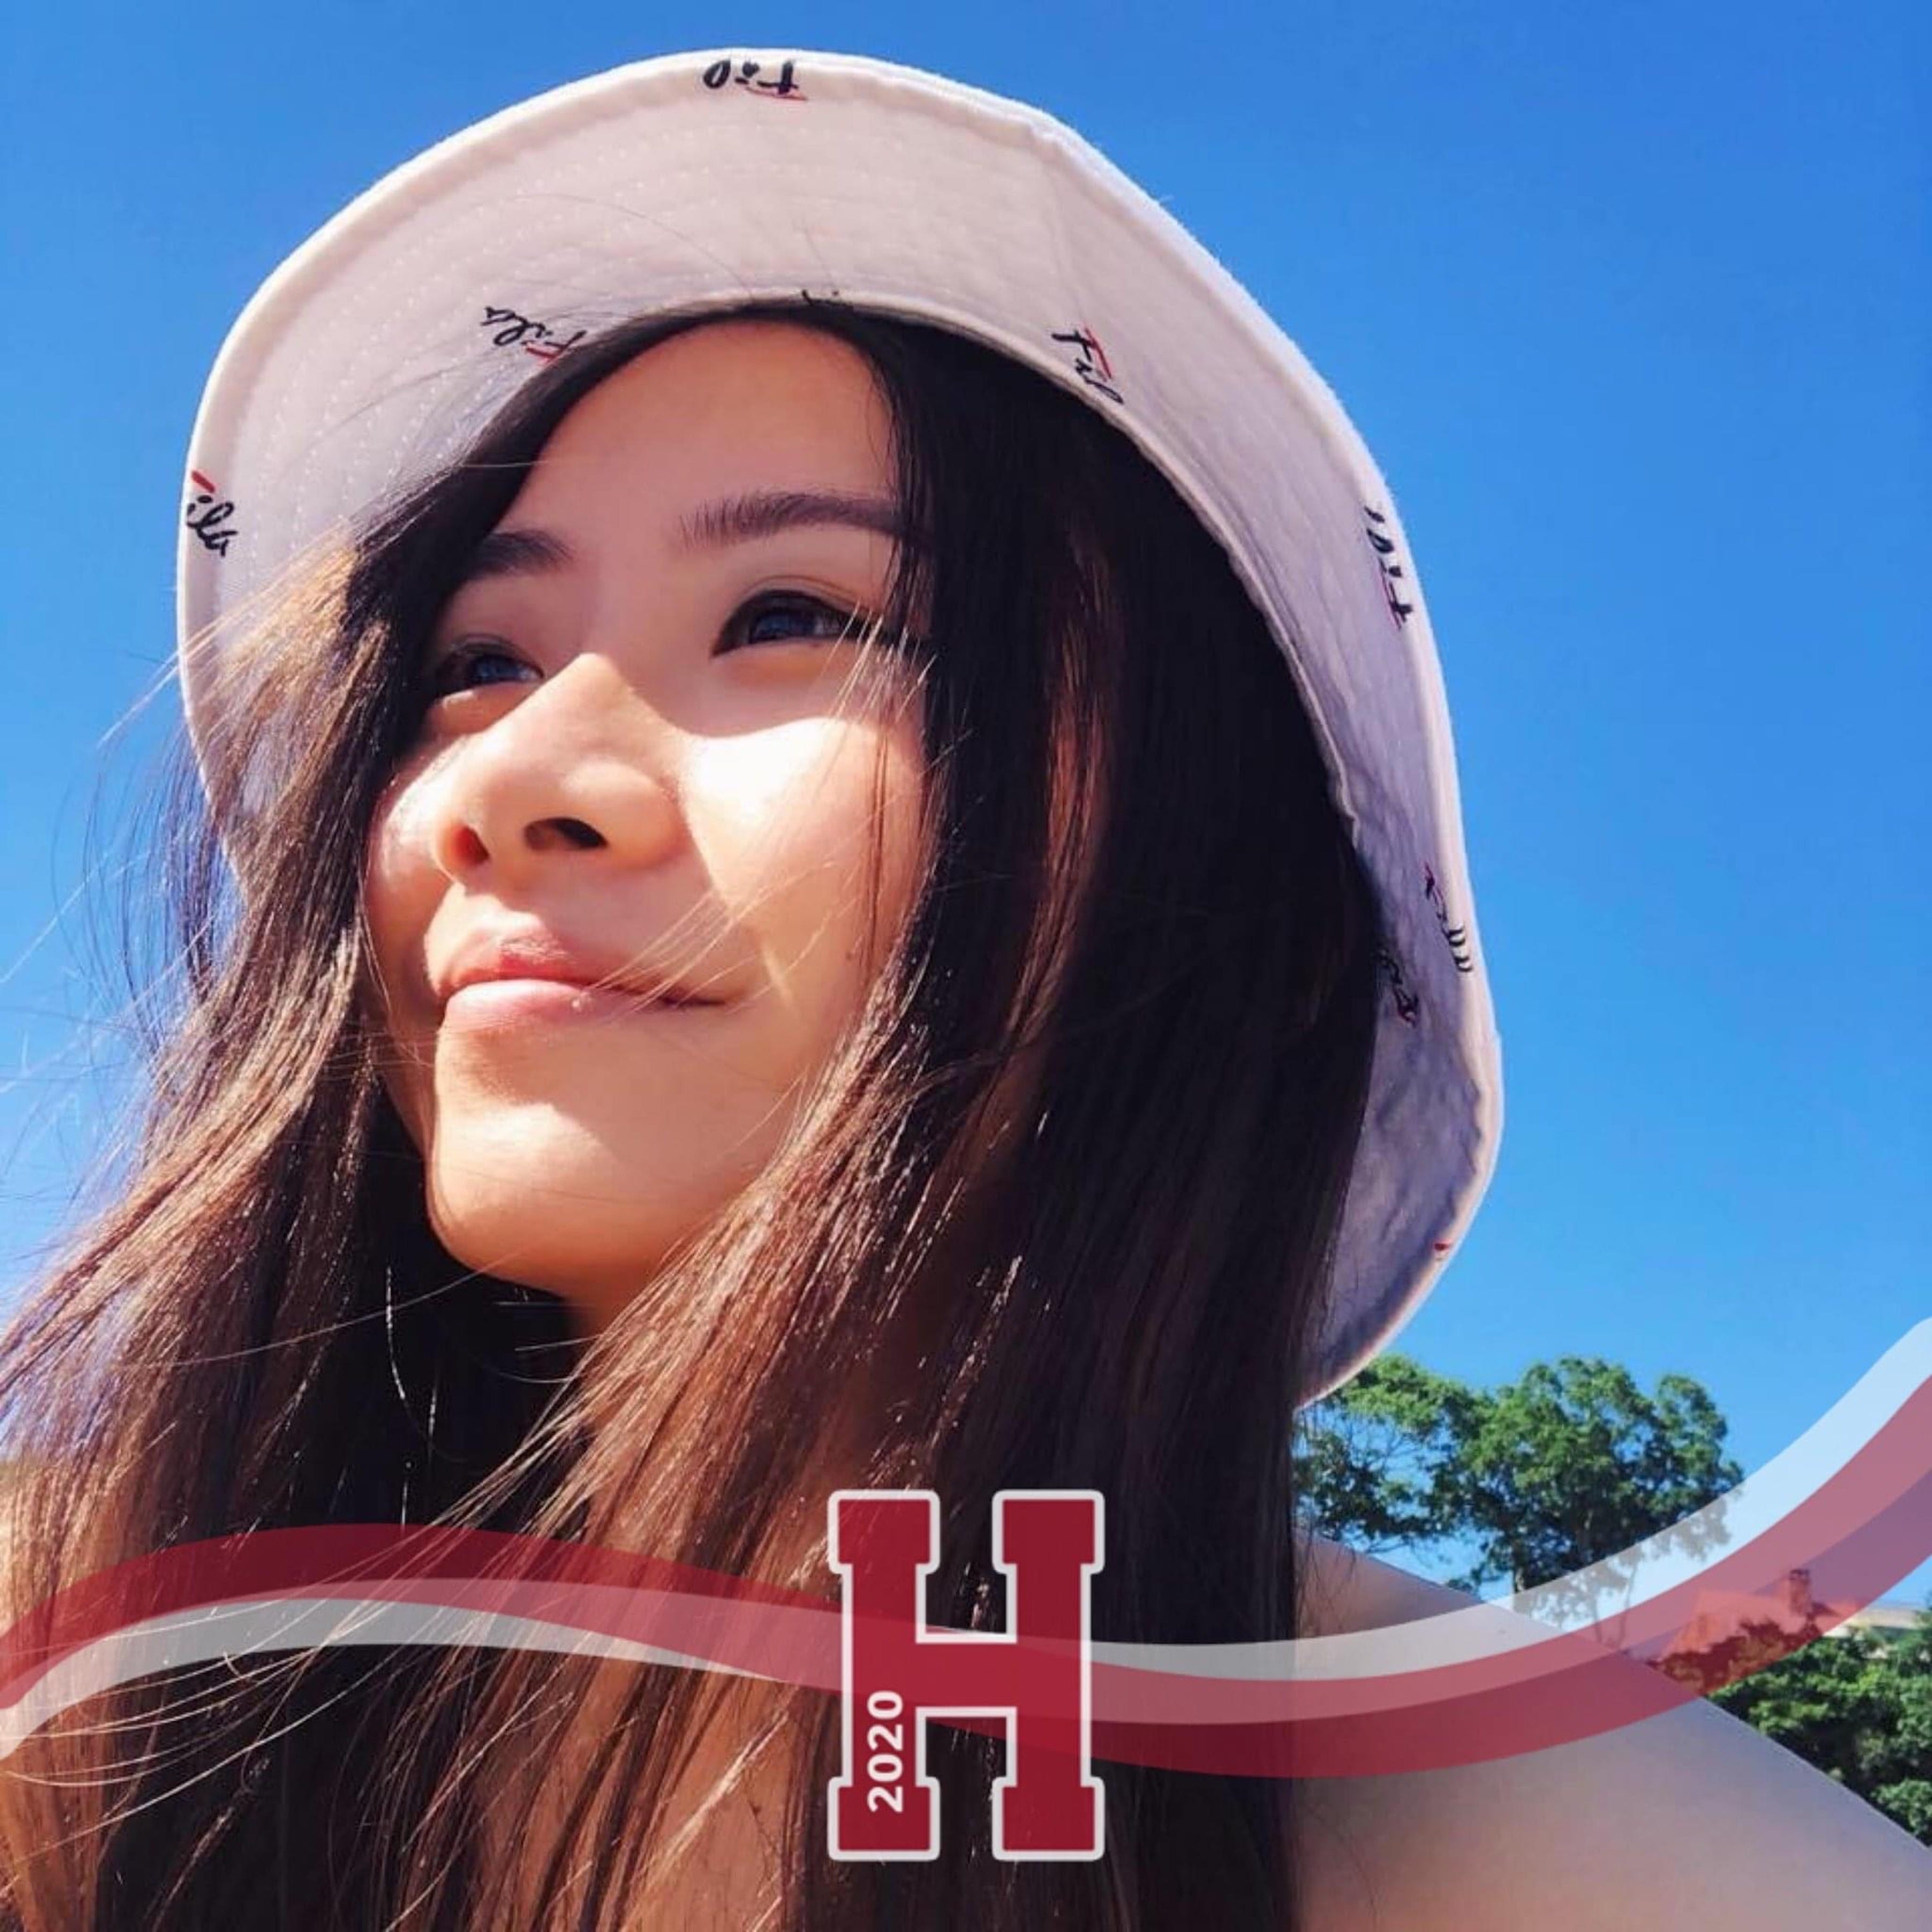 Zhang's time in Harvard University prepares her for the challenges of Harvard Medical School.